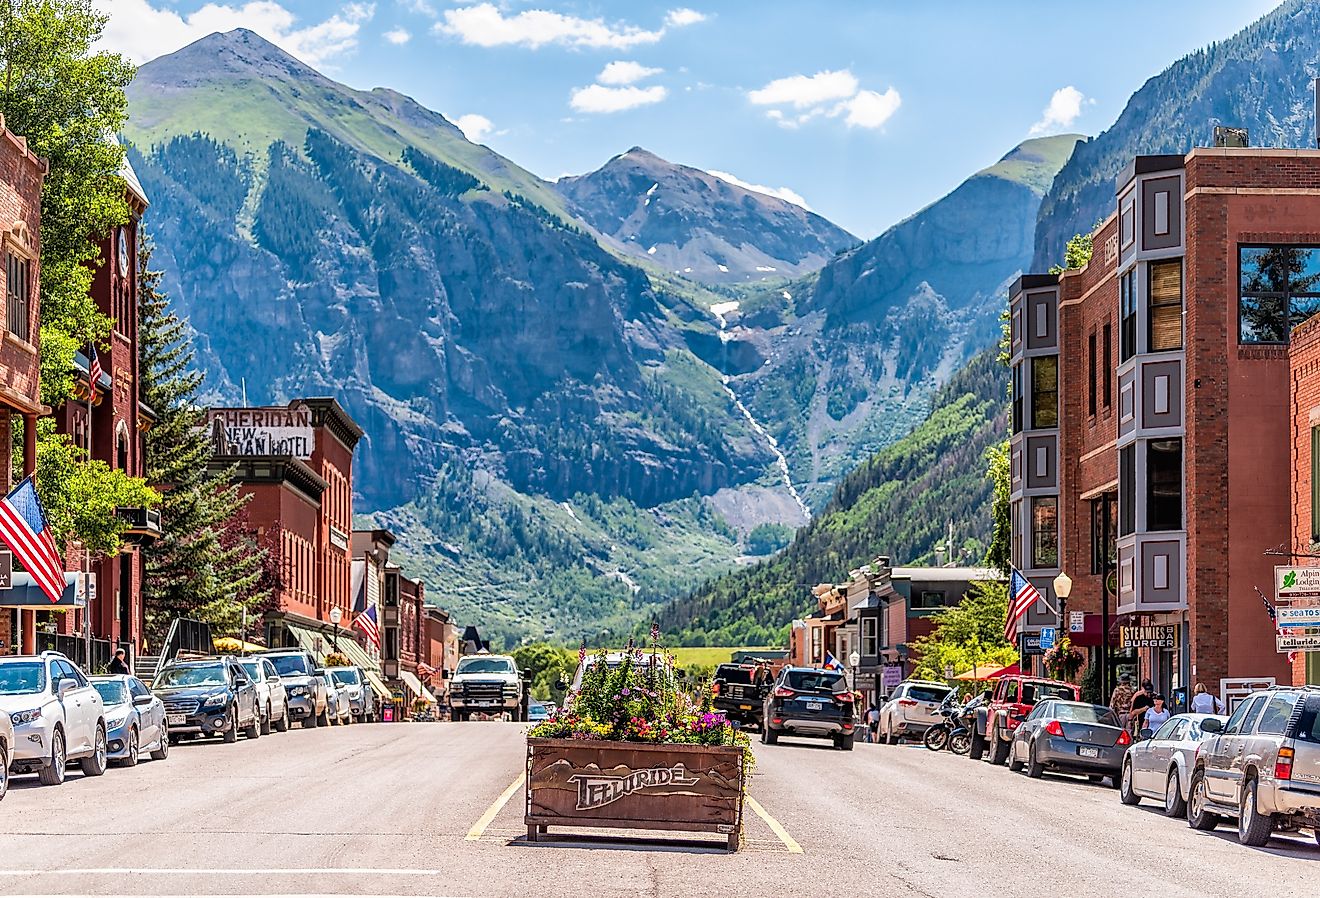 Main Street in Telluride, Colorado. Image credit Kristi Blokhin via Shutterstock